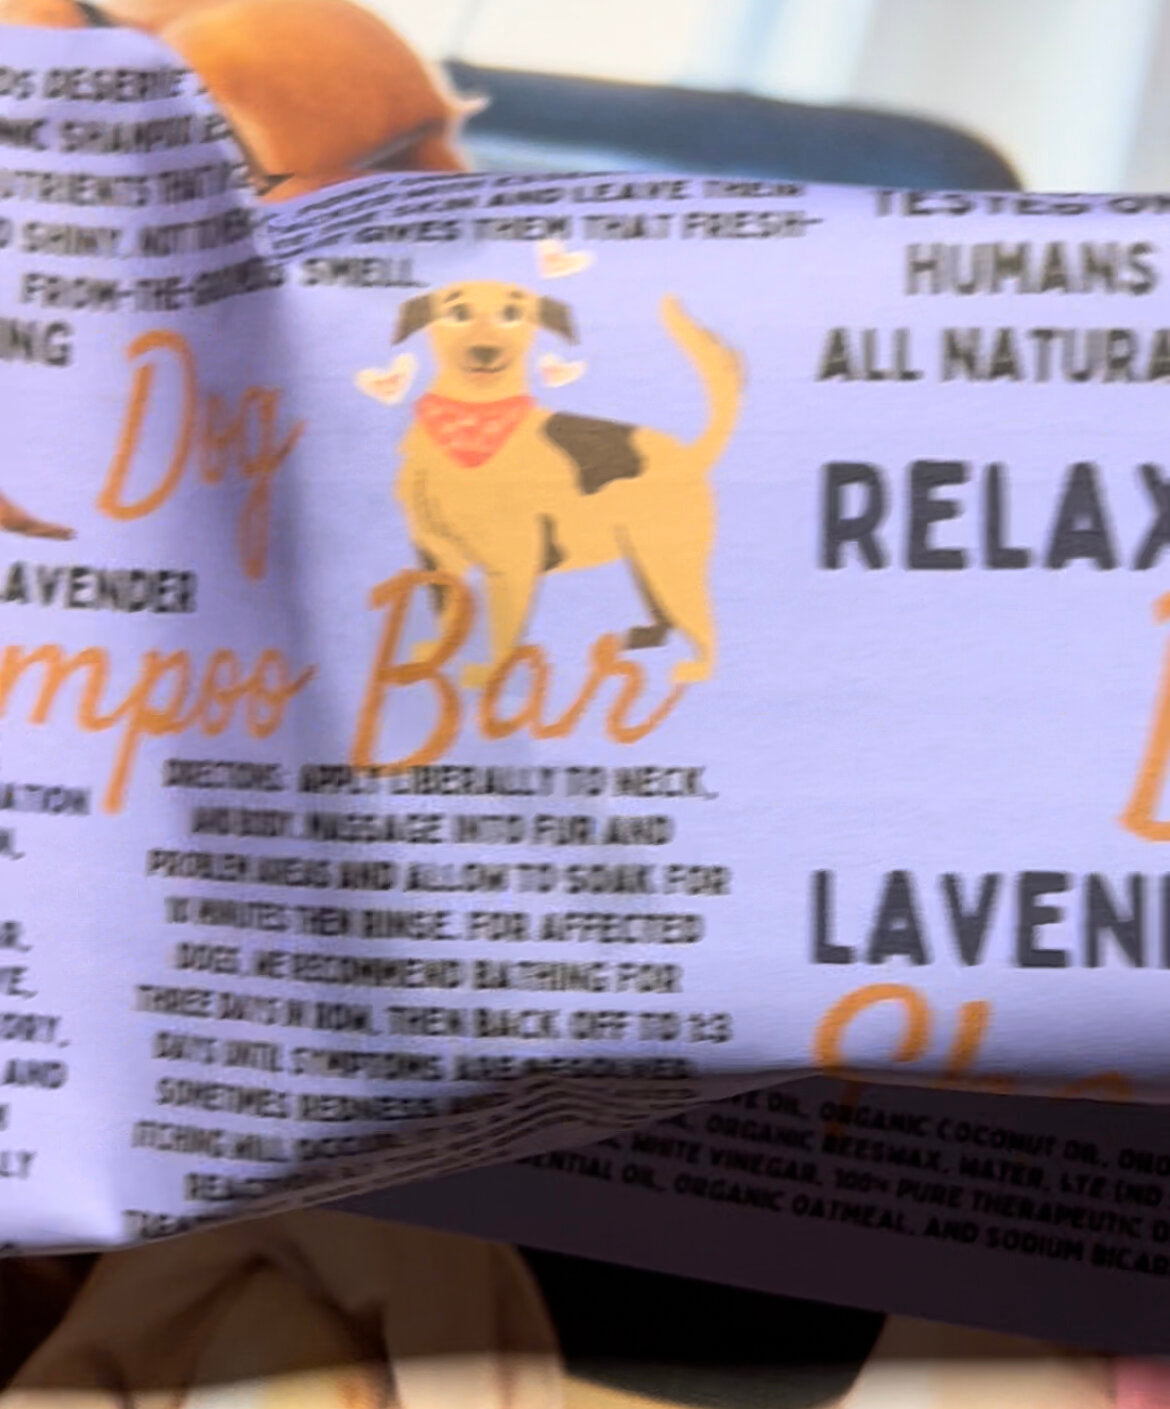 Relaxing Lavender Organic Dog Shampoo Bar